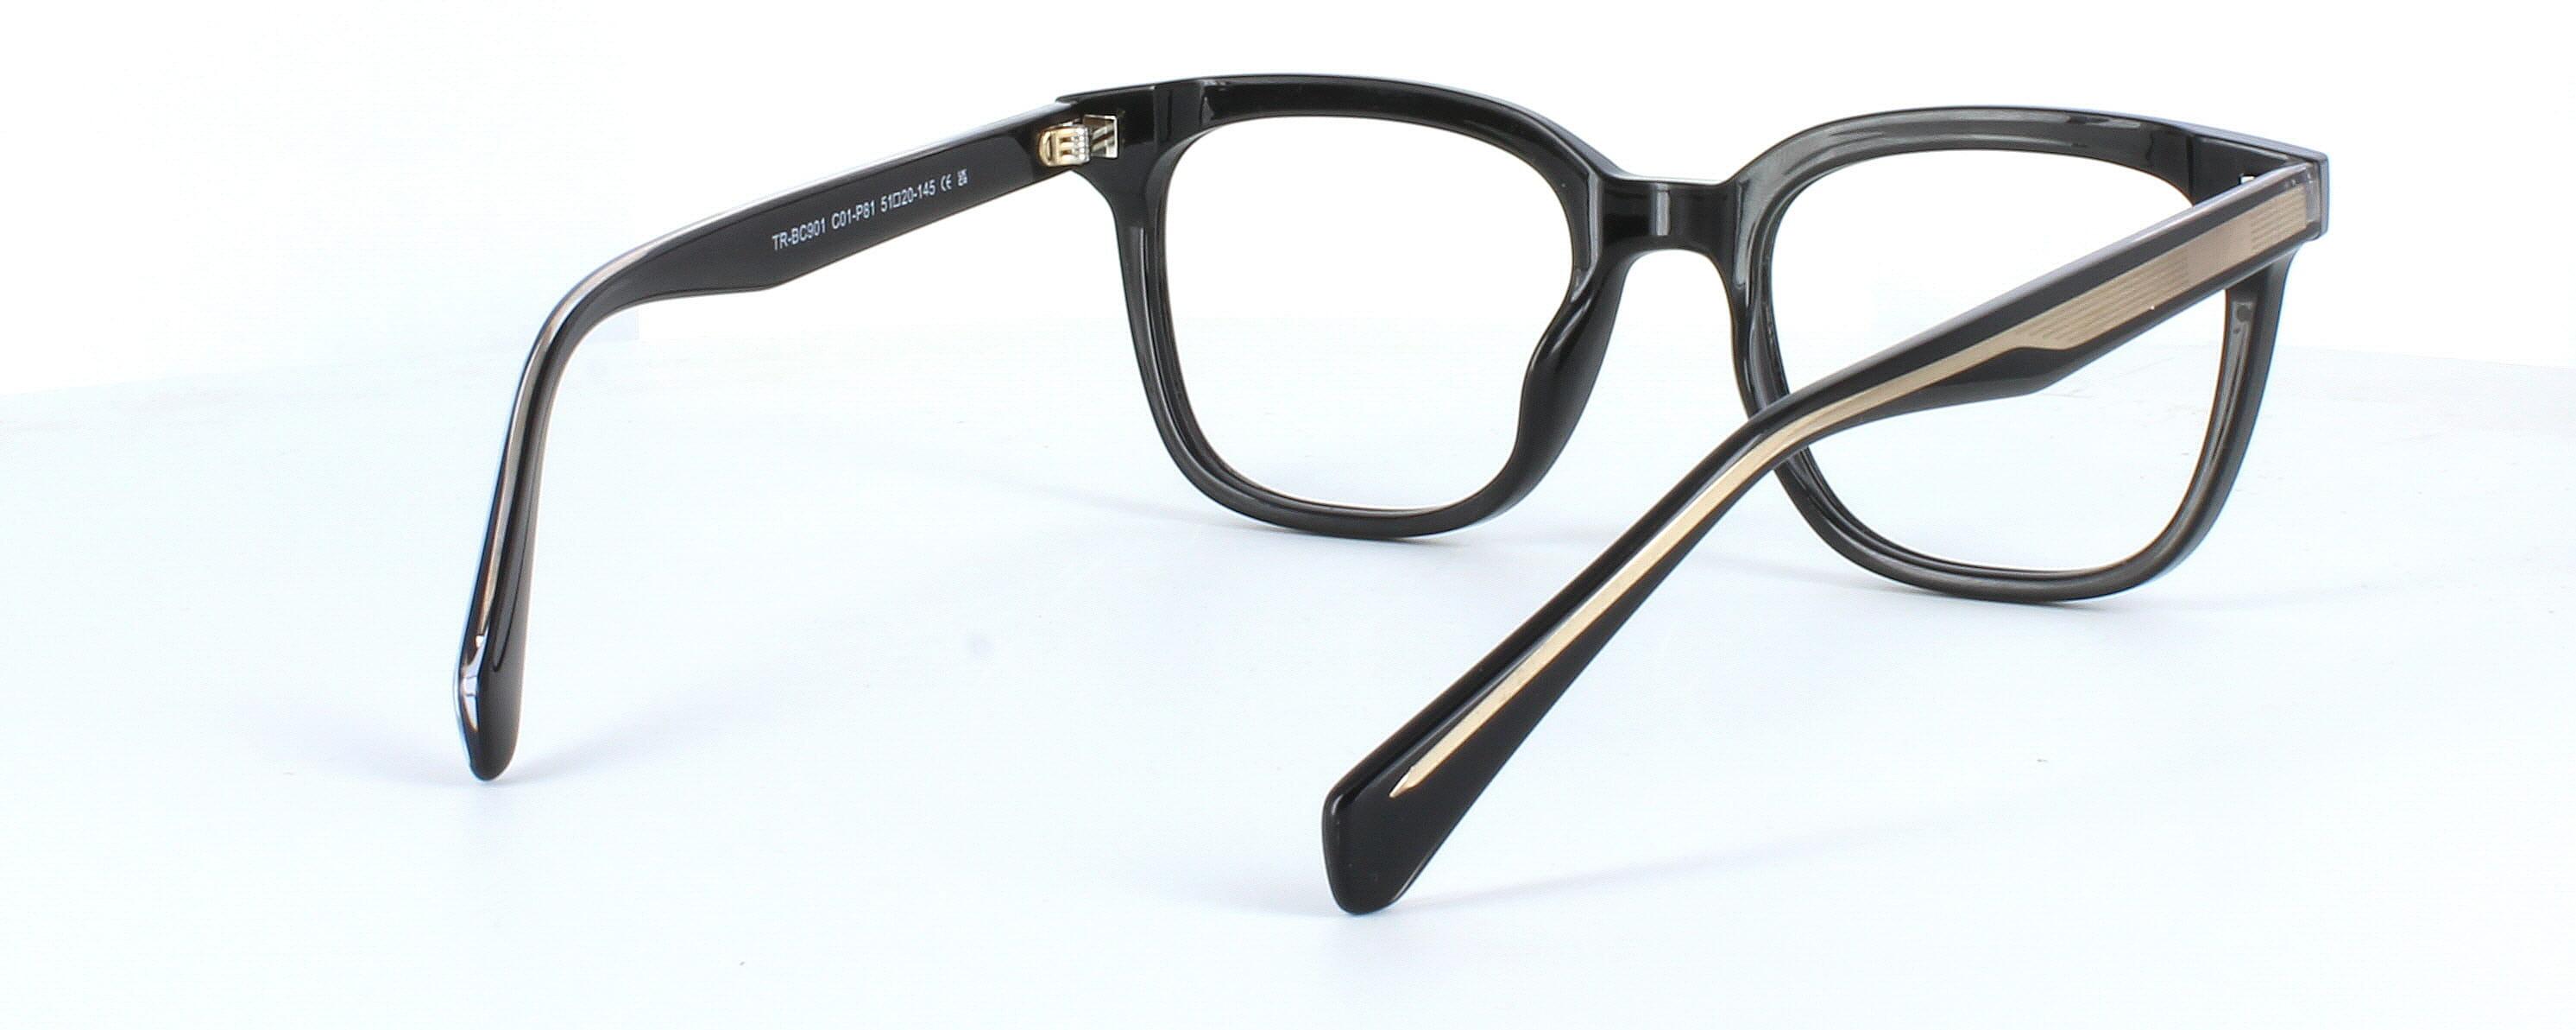 Edward Scotts TRBC901 - Black - Unisex acetate retro style glasses frame with square shaped lenses - image view 5